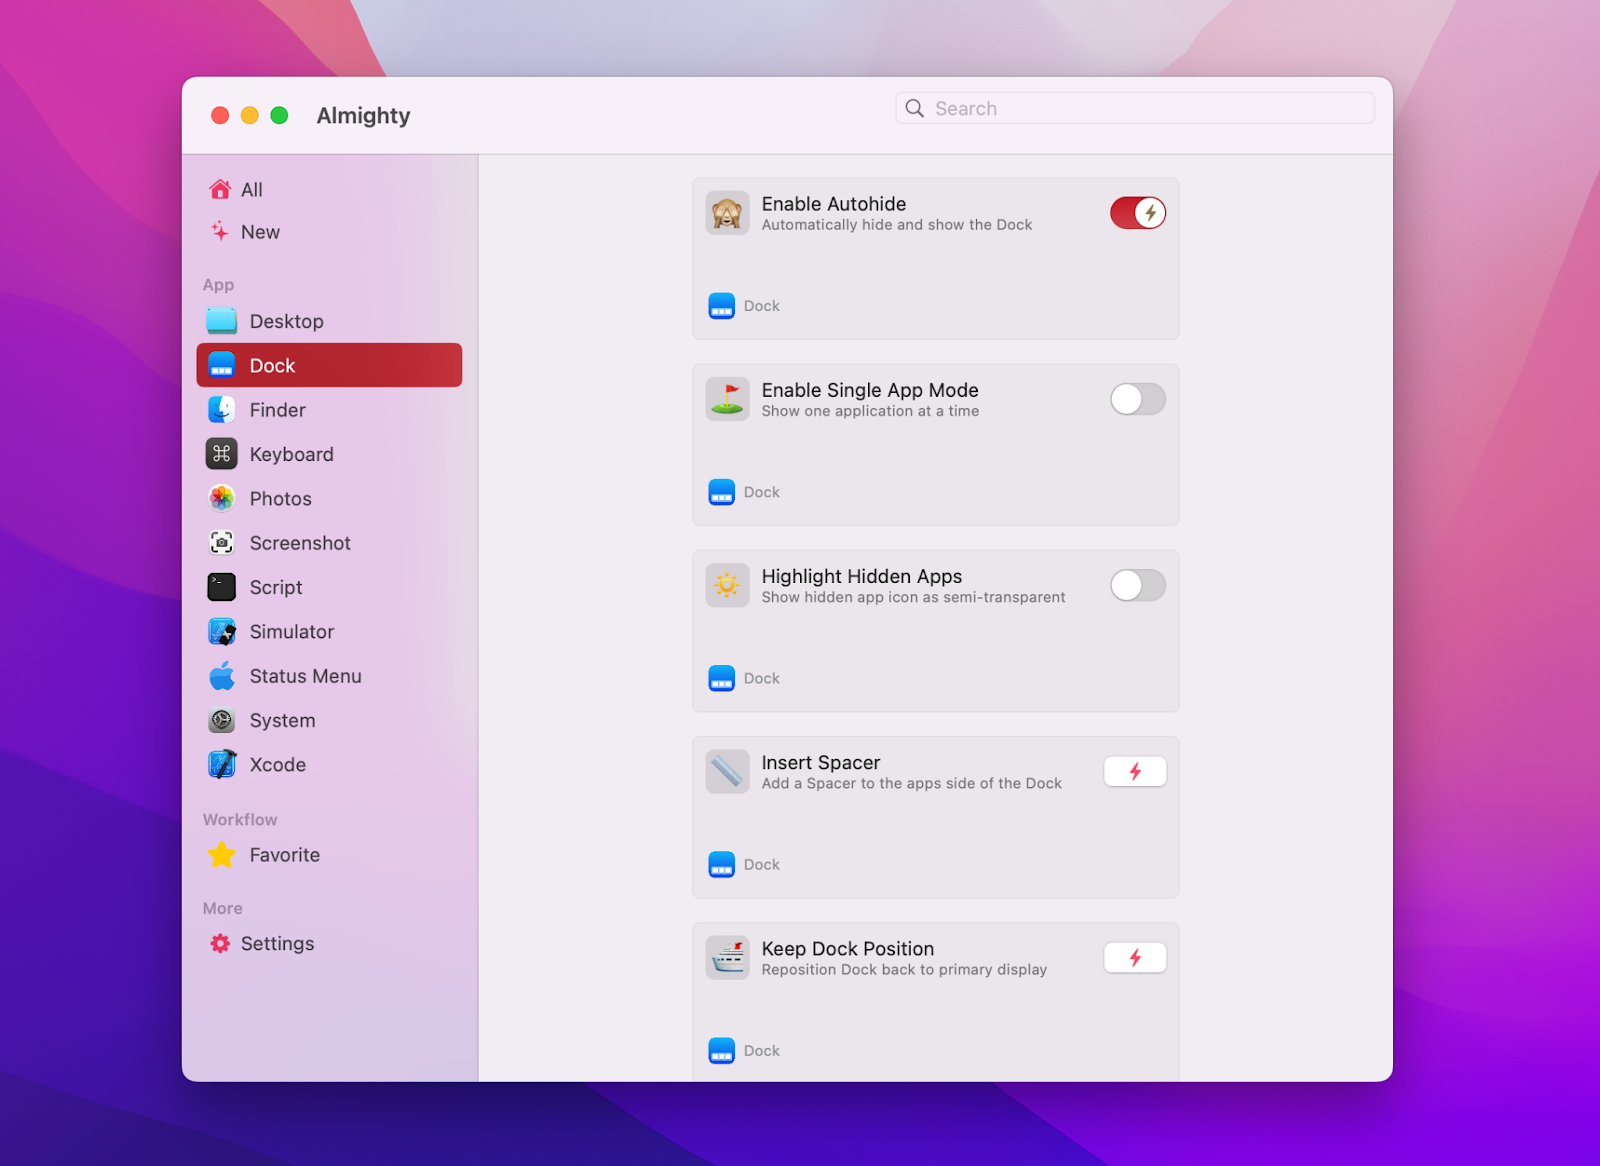 macbook icons on desktop